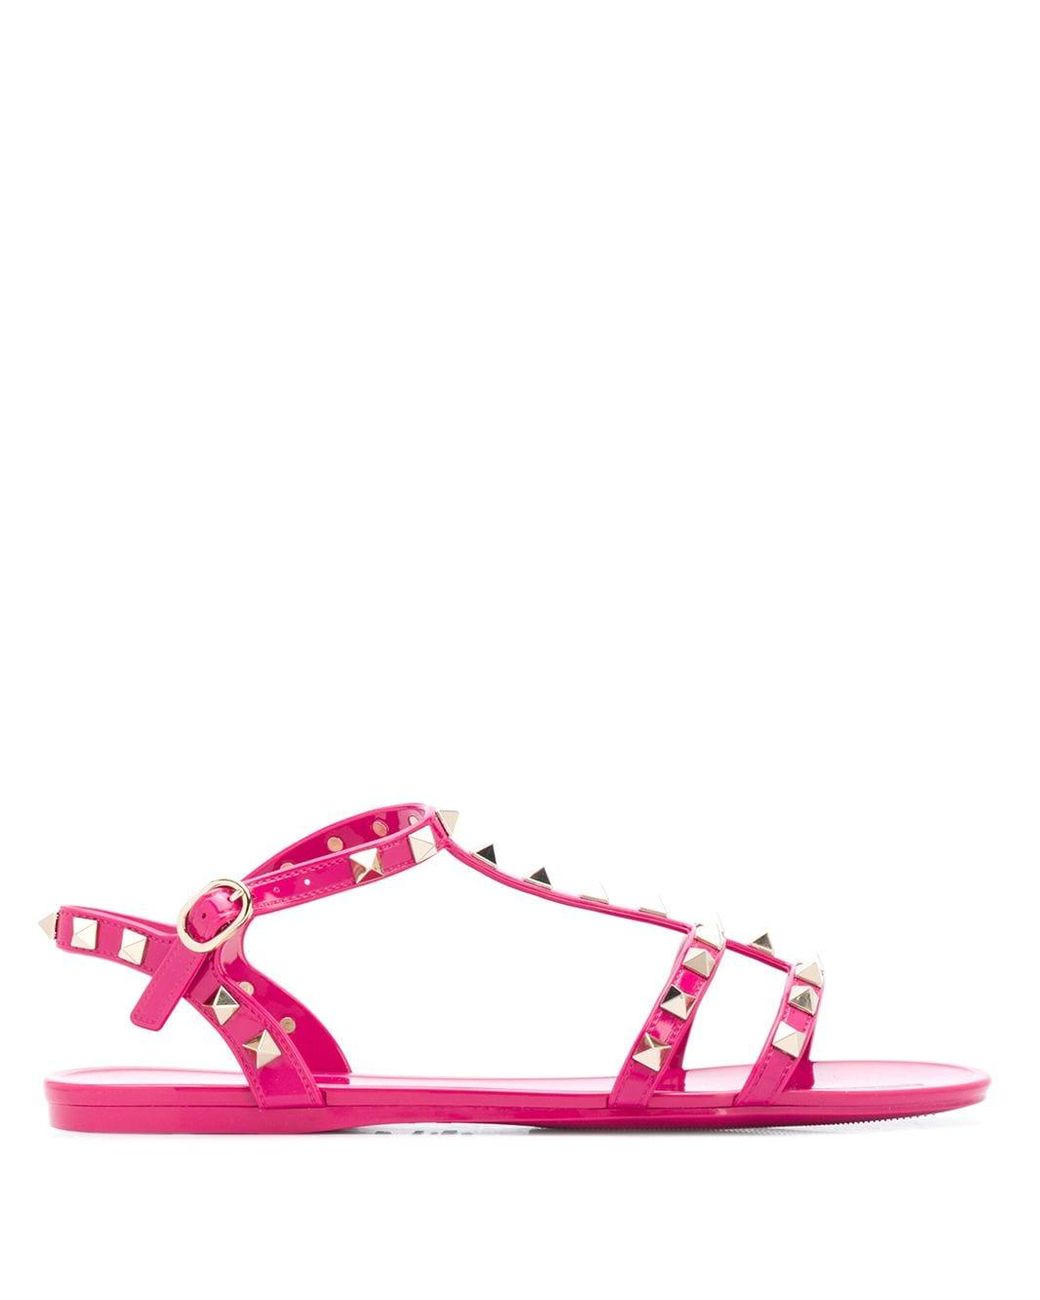 Valentino Garavani Rockstud Rubber Flip-flops in Pink - Lyst